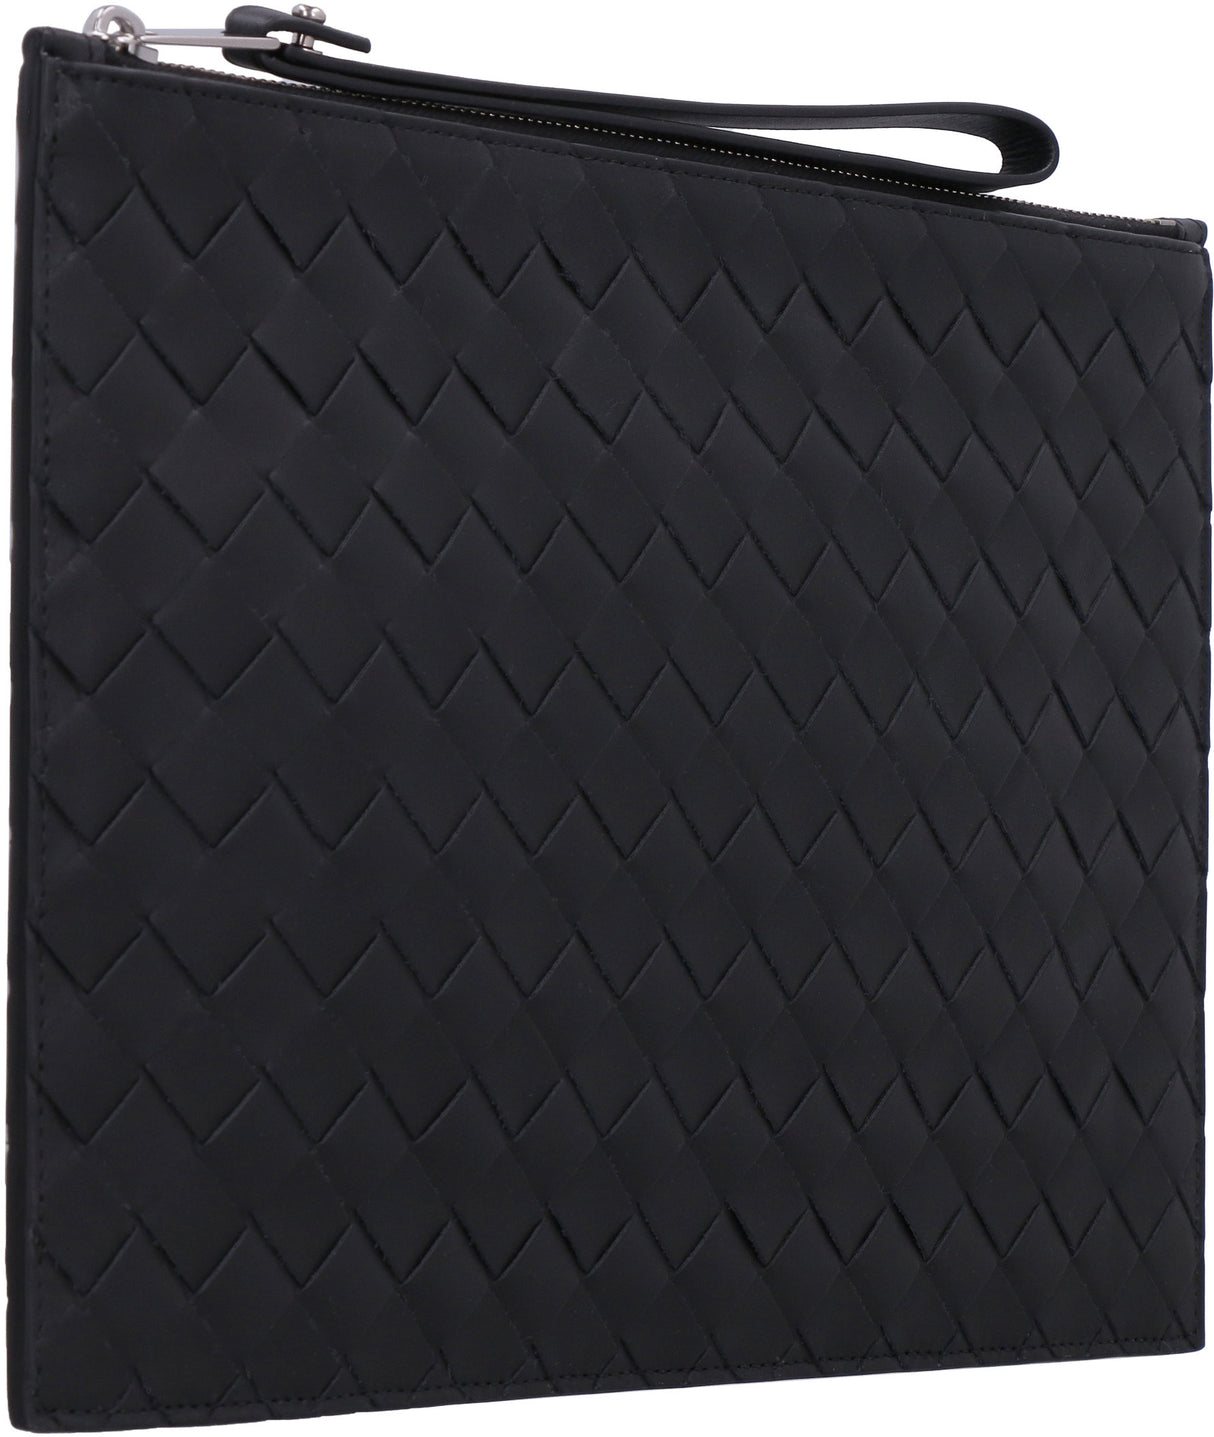 BOTTEGA VENETA Men's Black Leather Pouch Handbag - Intrecciato Design, Top Zip Closure, Wrist Strap